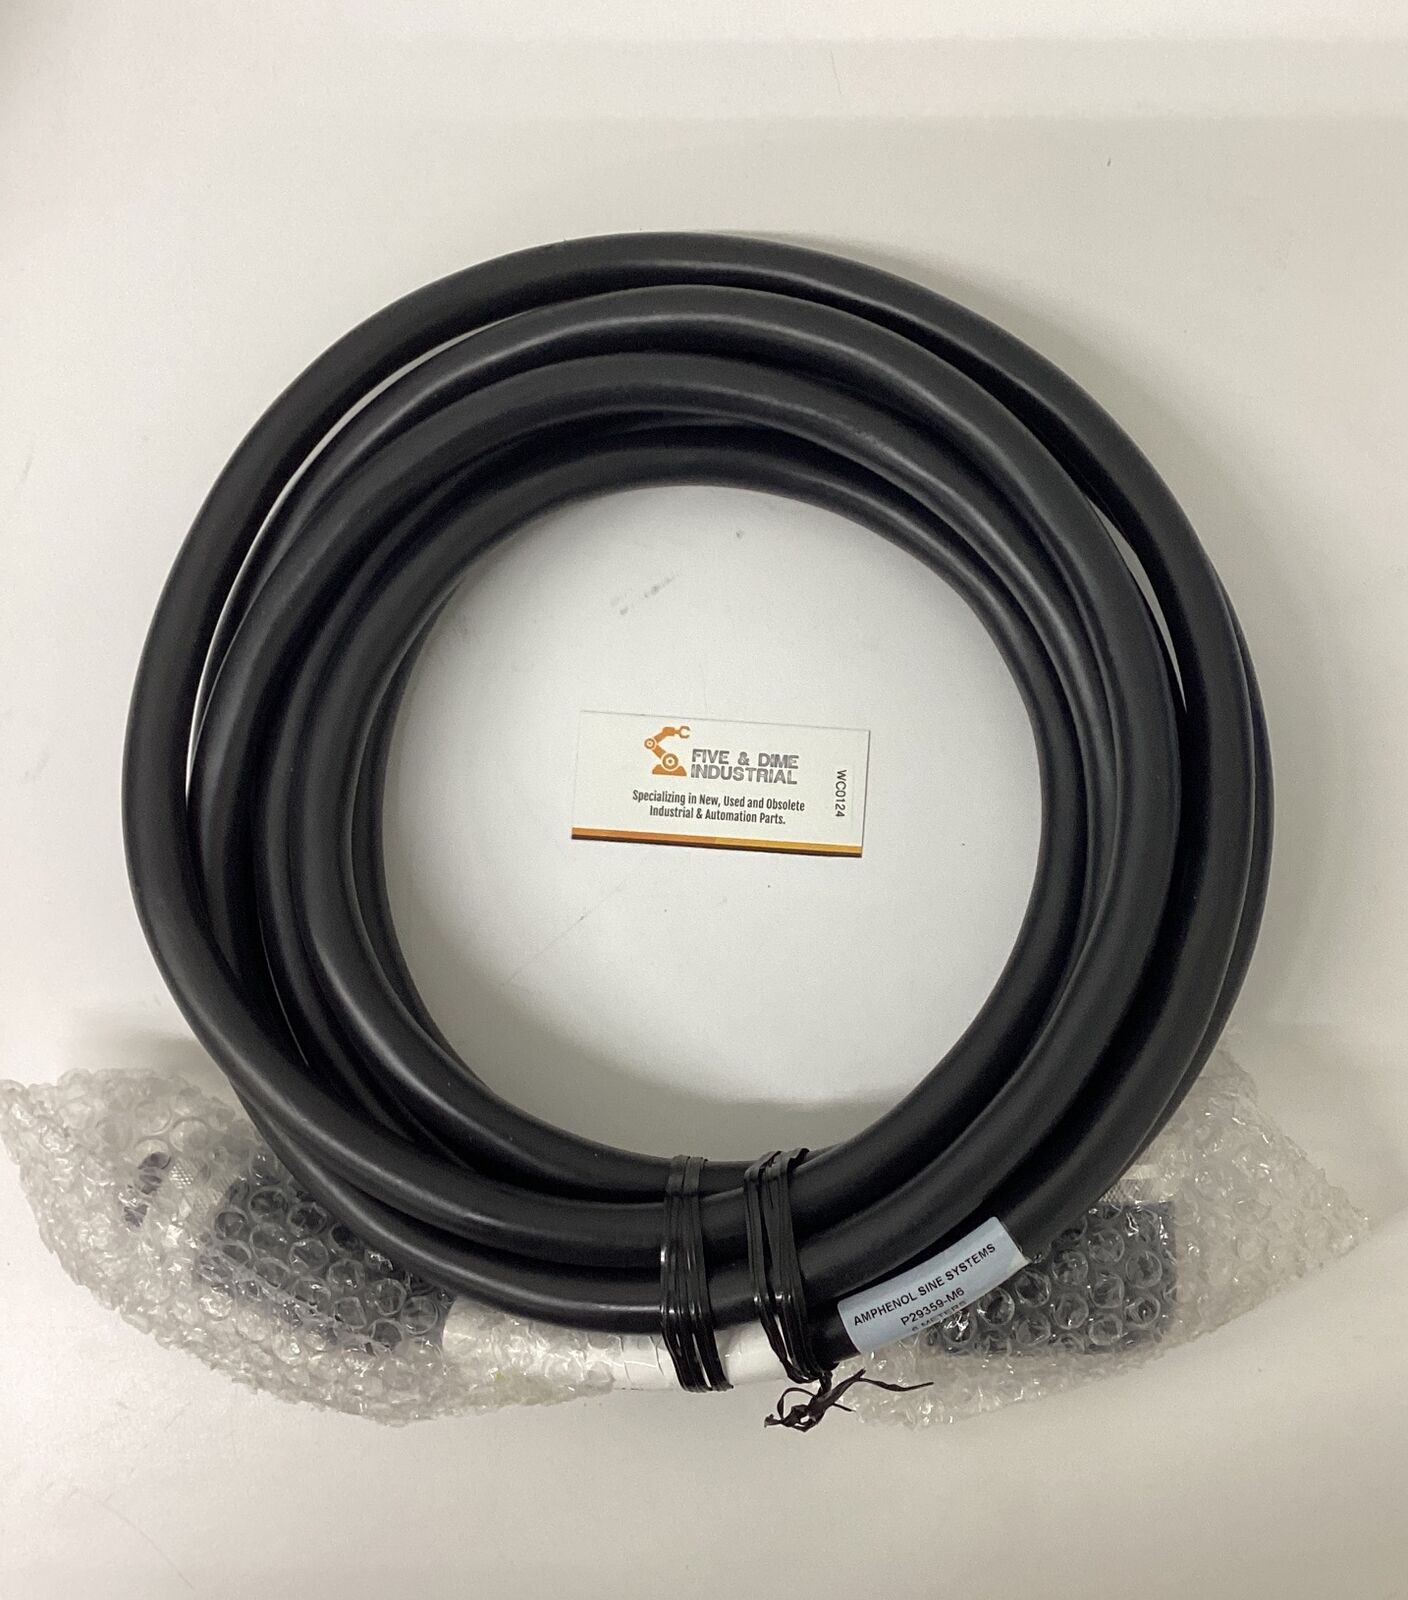 Amphenol P29359-M6  4-Pole 600V  90 Degree to Straight Cable (CBL100)